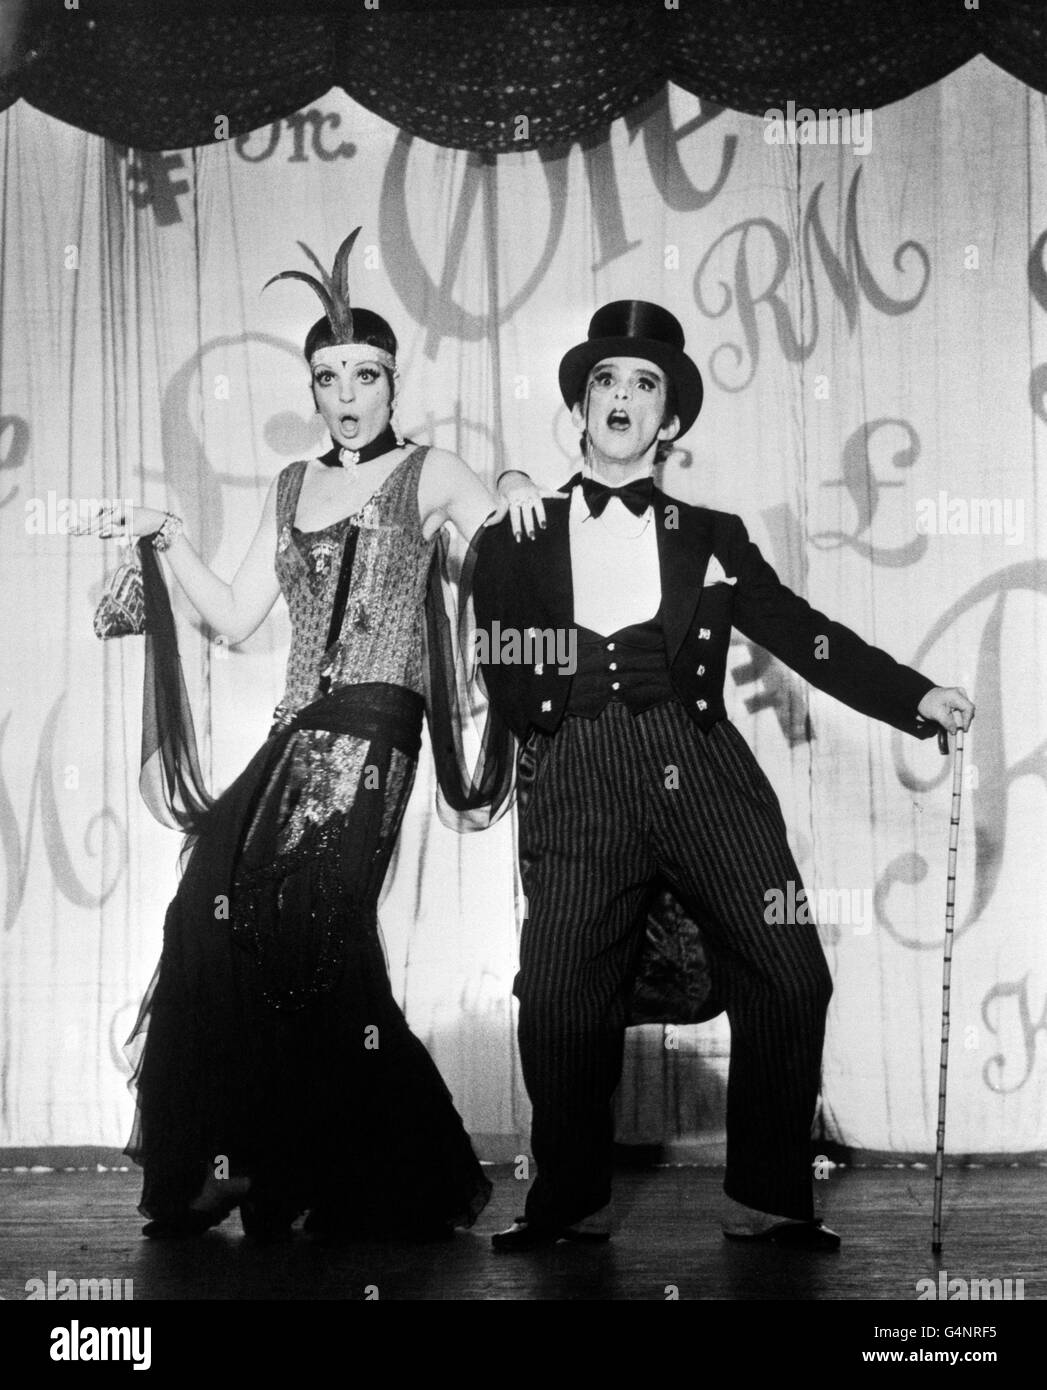 Liza Minnelli - Théâtre - Cabaret - Berlin Photo Stock - Alamy